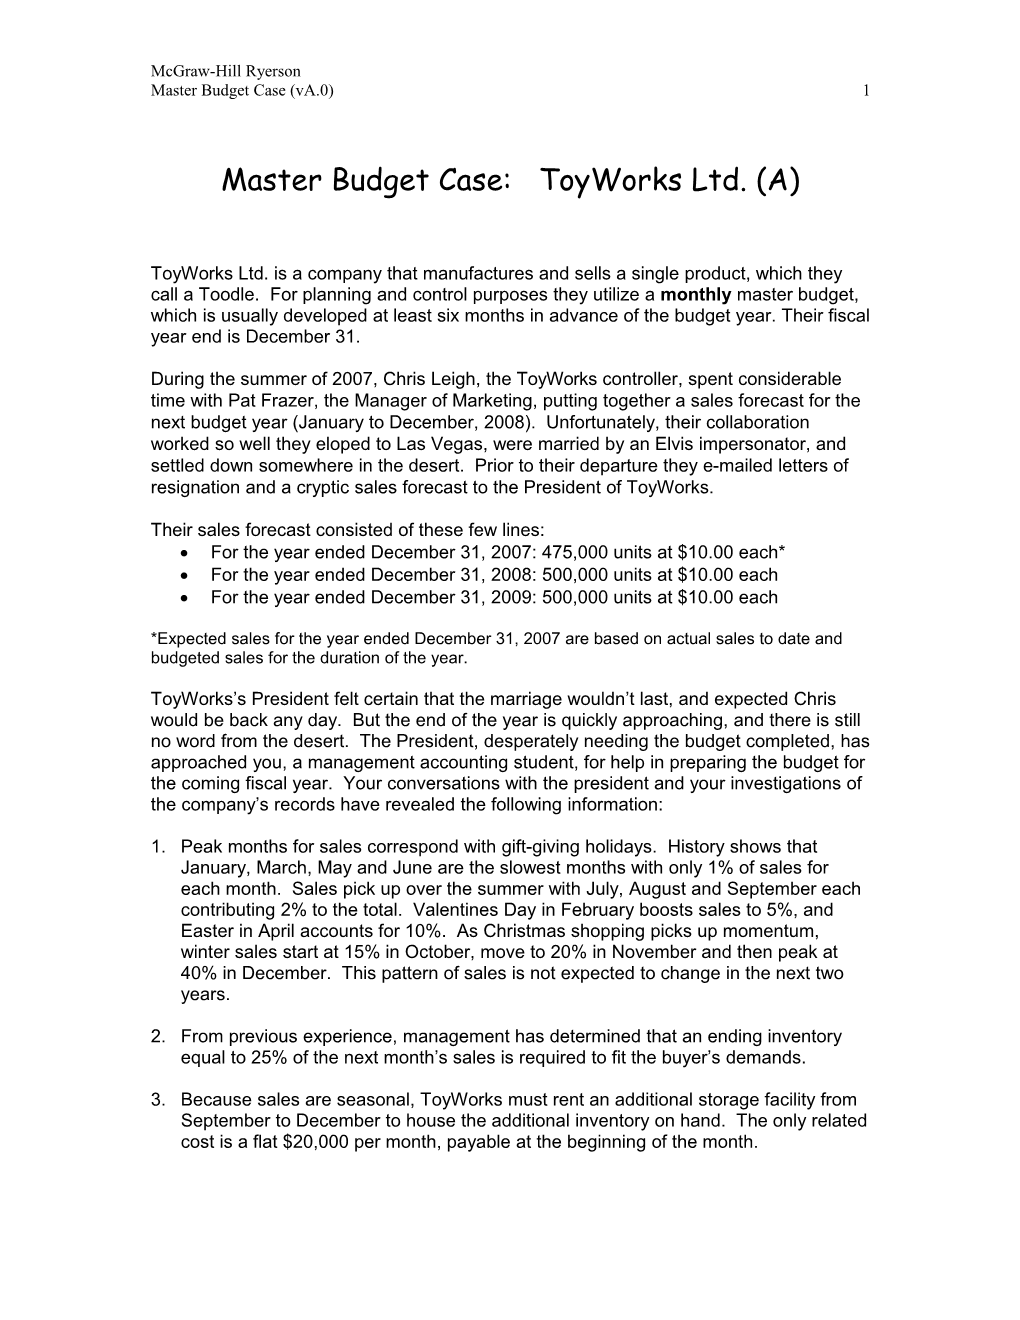 Master Budget Case: Toyworks Ltd.(A)